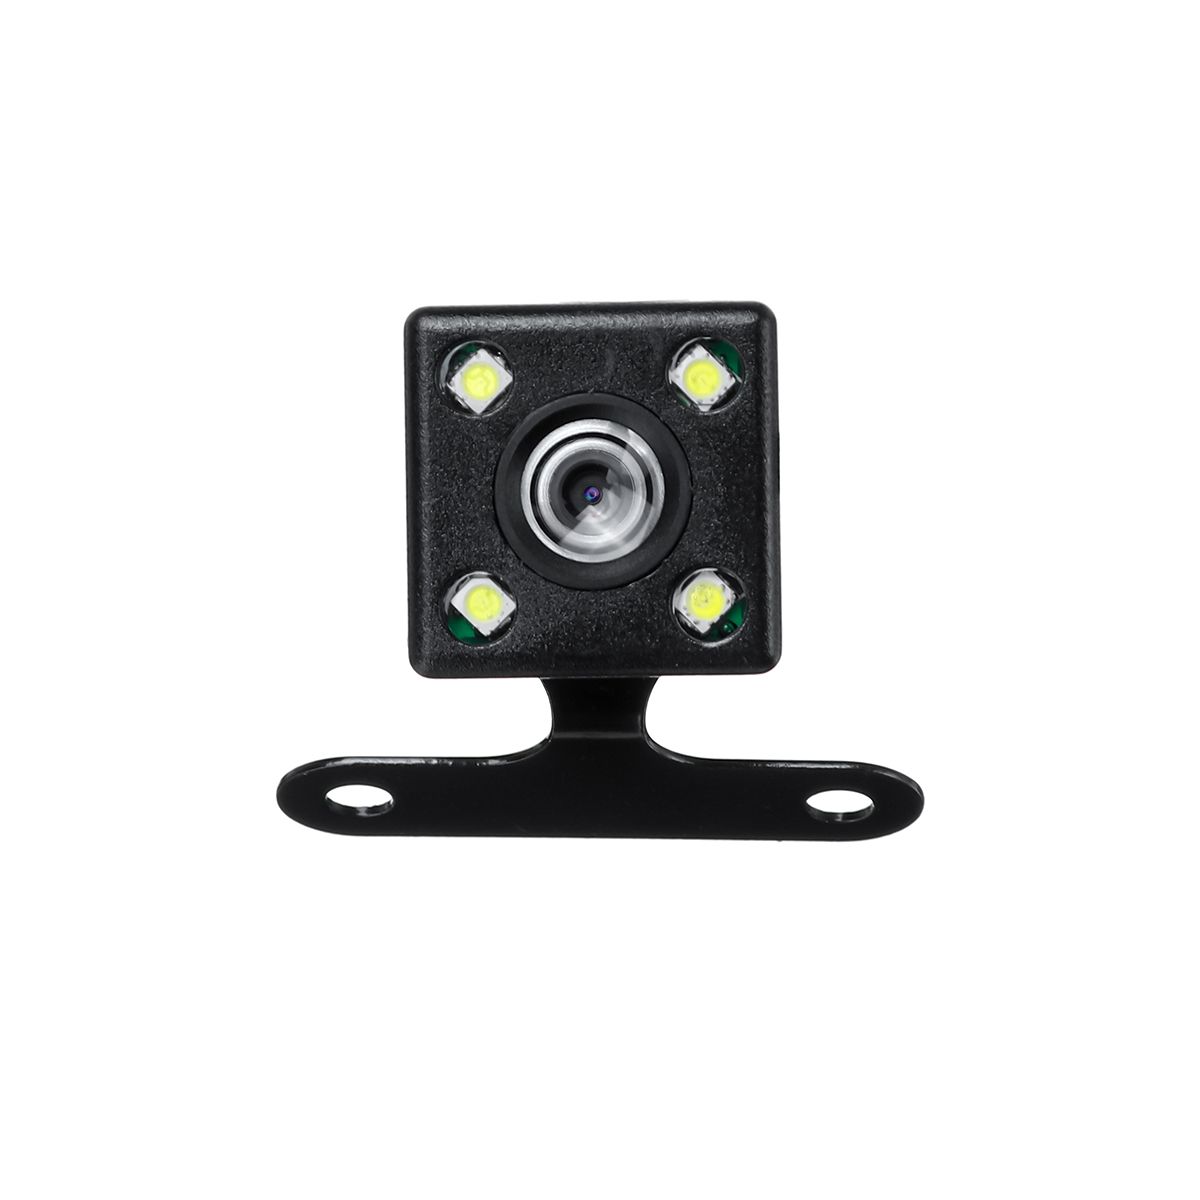 4-Inch-HD-Dual-Lens-1080P-Vehicle-Car-Dash-Cam-Video-Camera-Recorder-DVR-G-Sensor-1611401